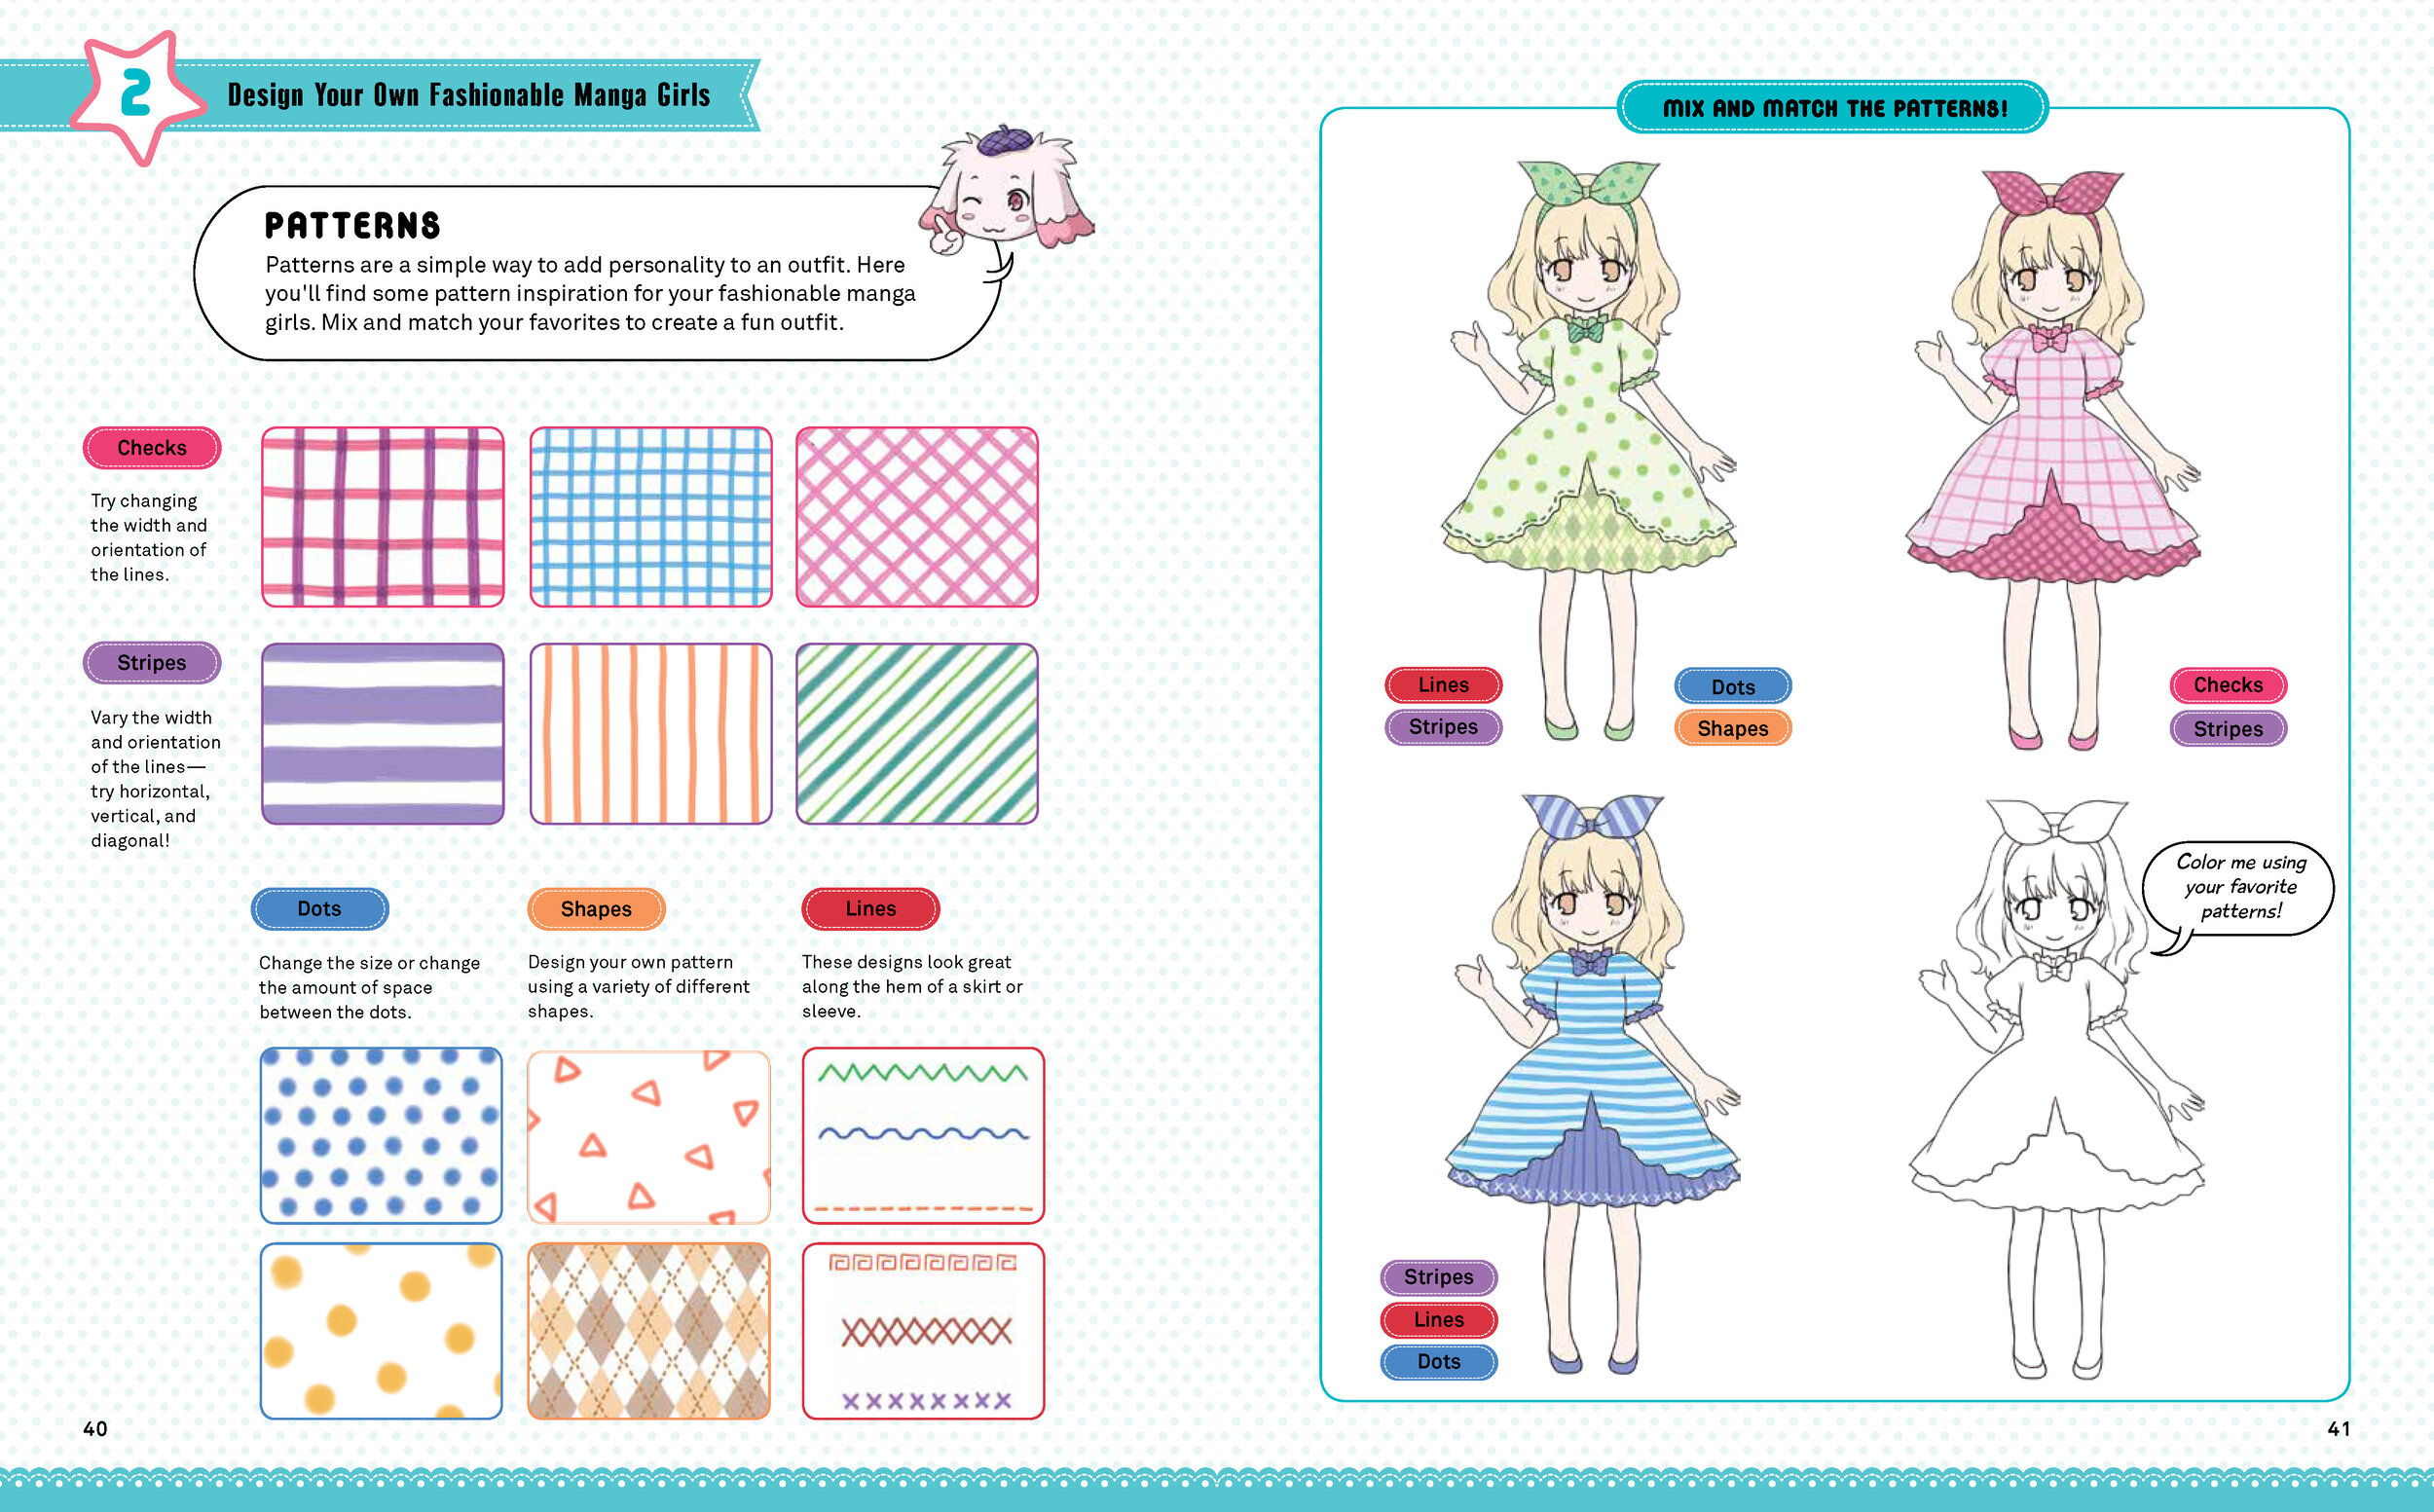 Draw Fashionable Manga Girls 40.41.jpg